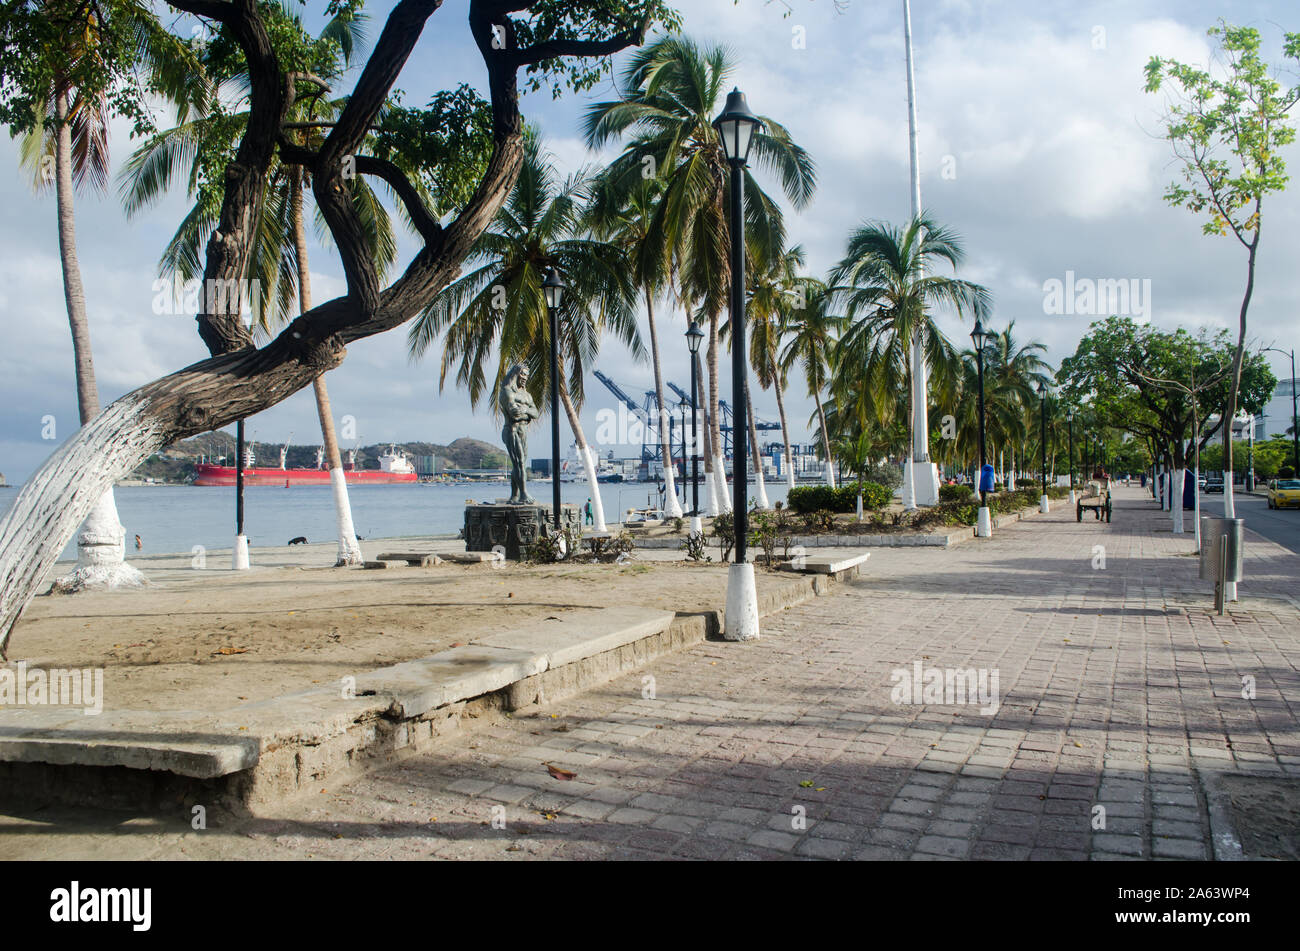 Paseo Bastidas, a beachfront boardwalk located in the Caribbean city of Santa Marta Stock Photo